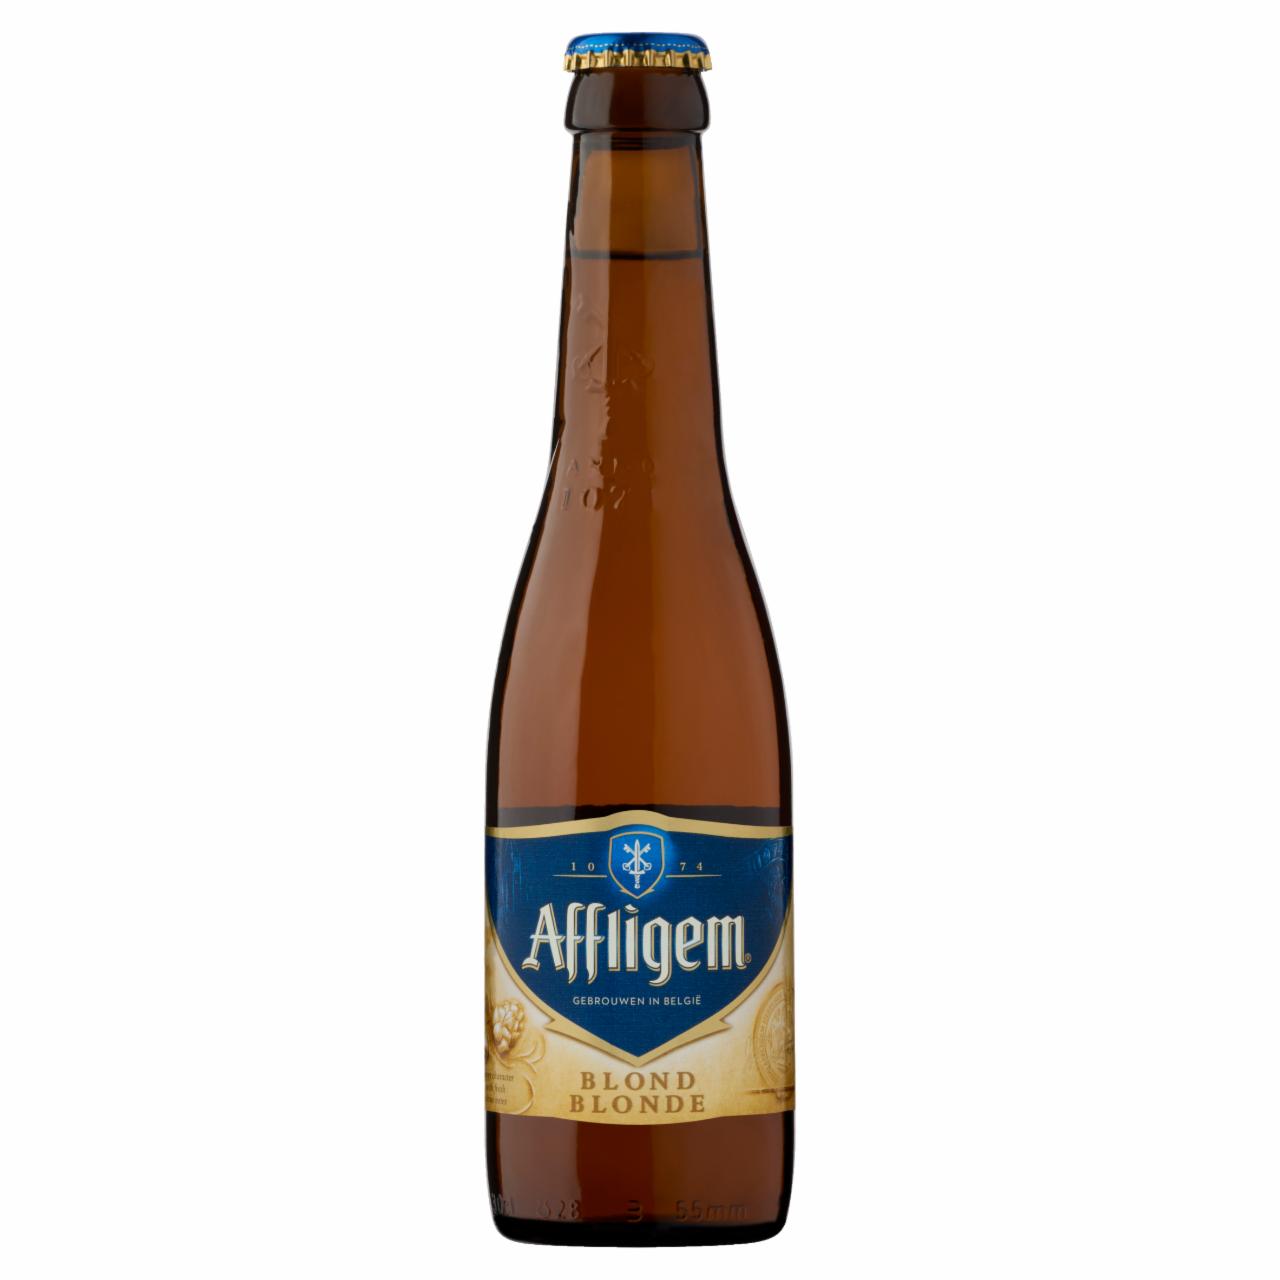 Képek - Affligem Blonde minőségi belga apátsági világos sör 6,7% 300 ml üveg